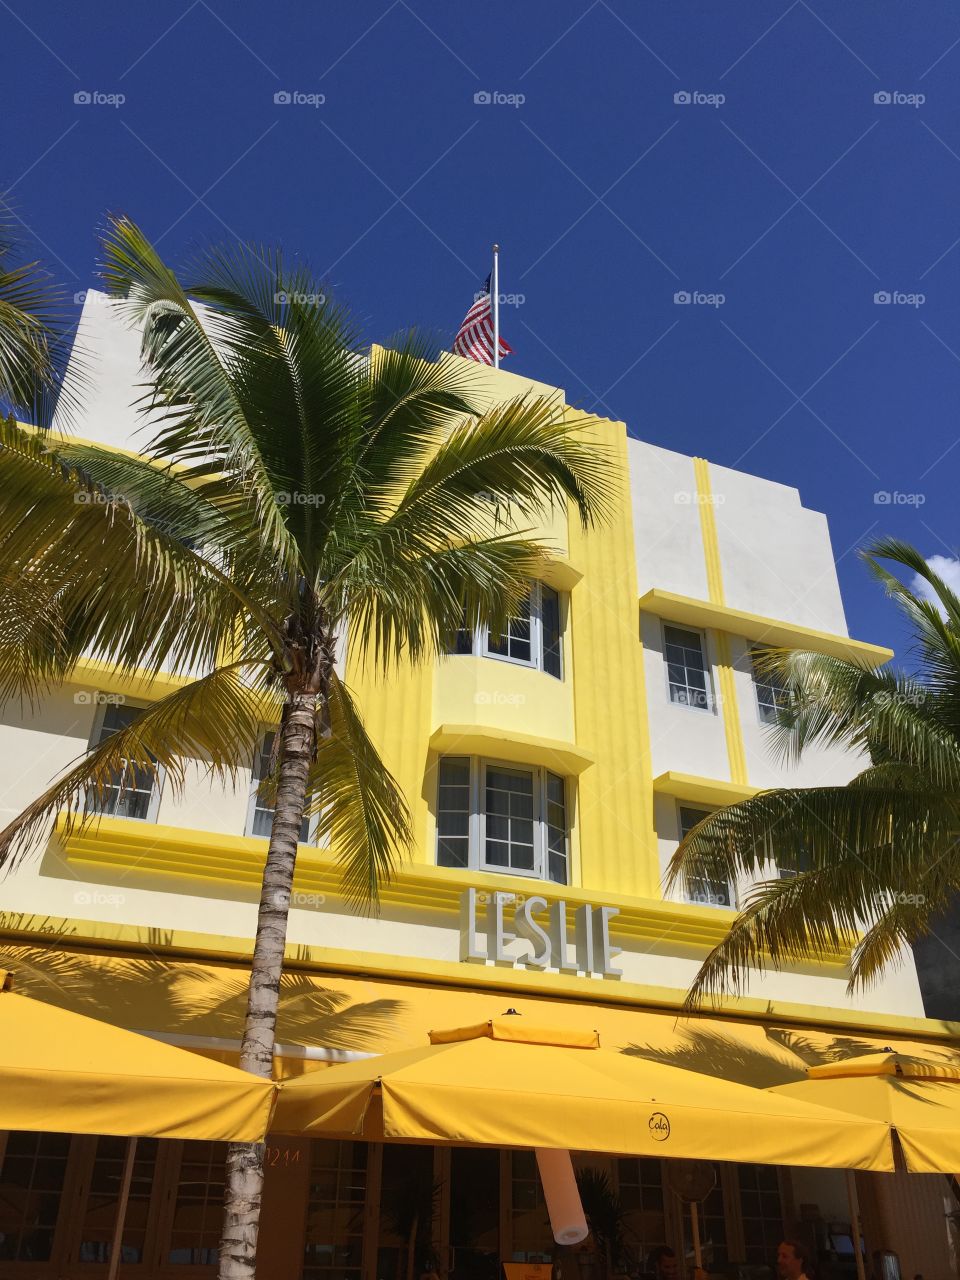 Miami Beach. Art Deco style hotel with palm trees at Miami Beach, Florida